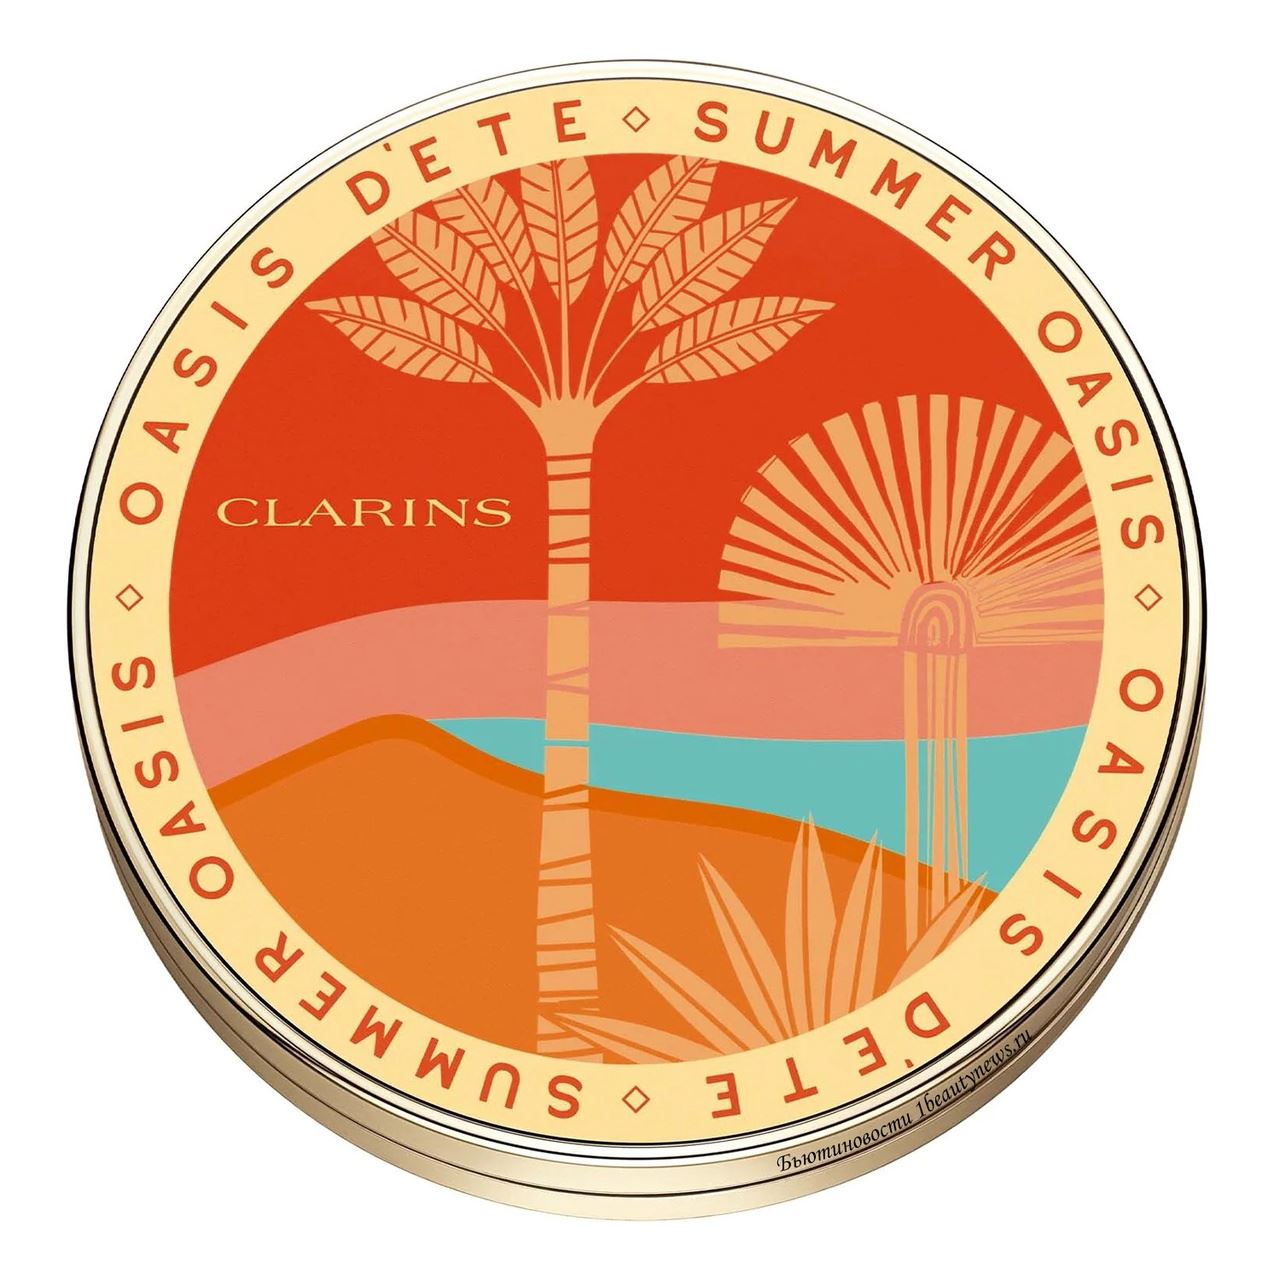 Clarins Summer Oasis Ever Bronze & Blush Poudre Compacte Summer 2022